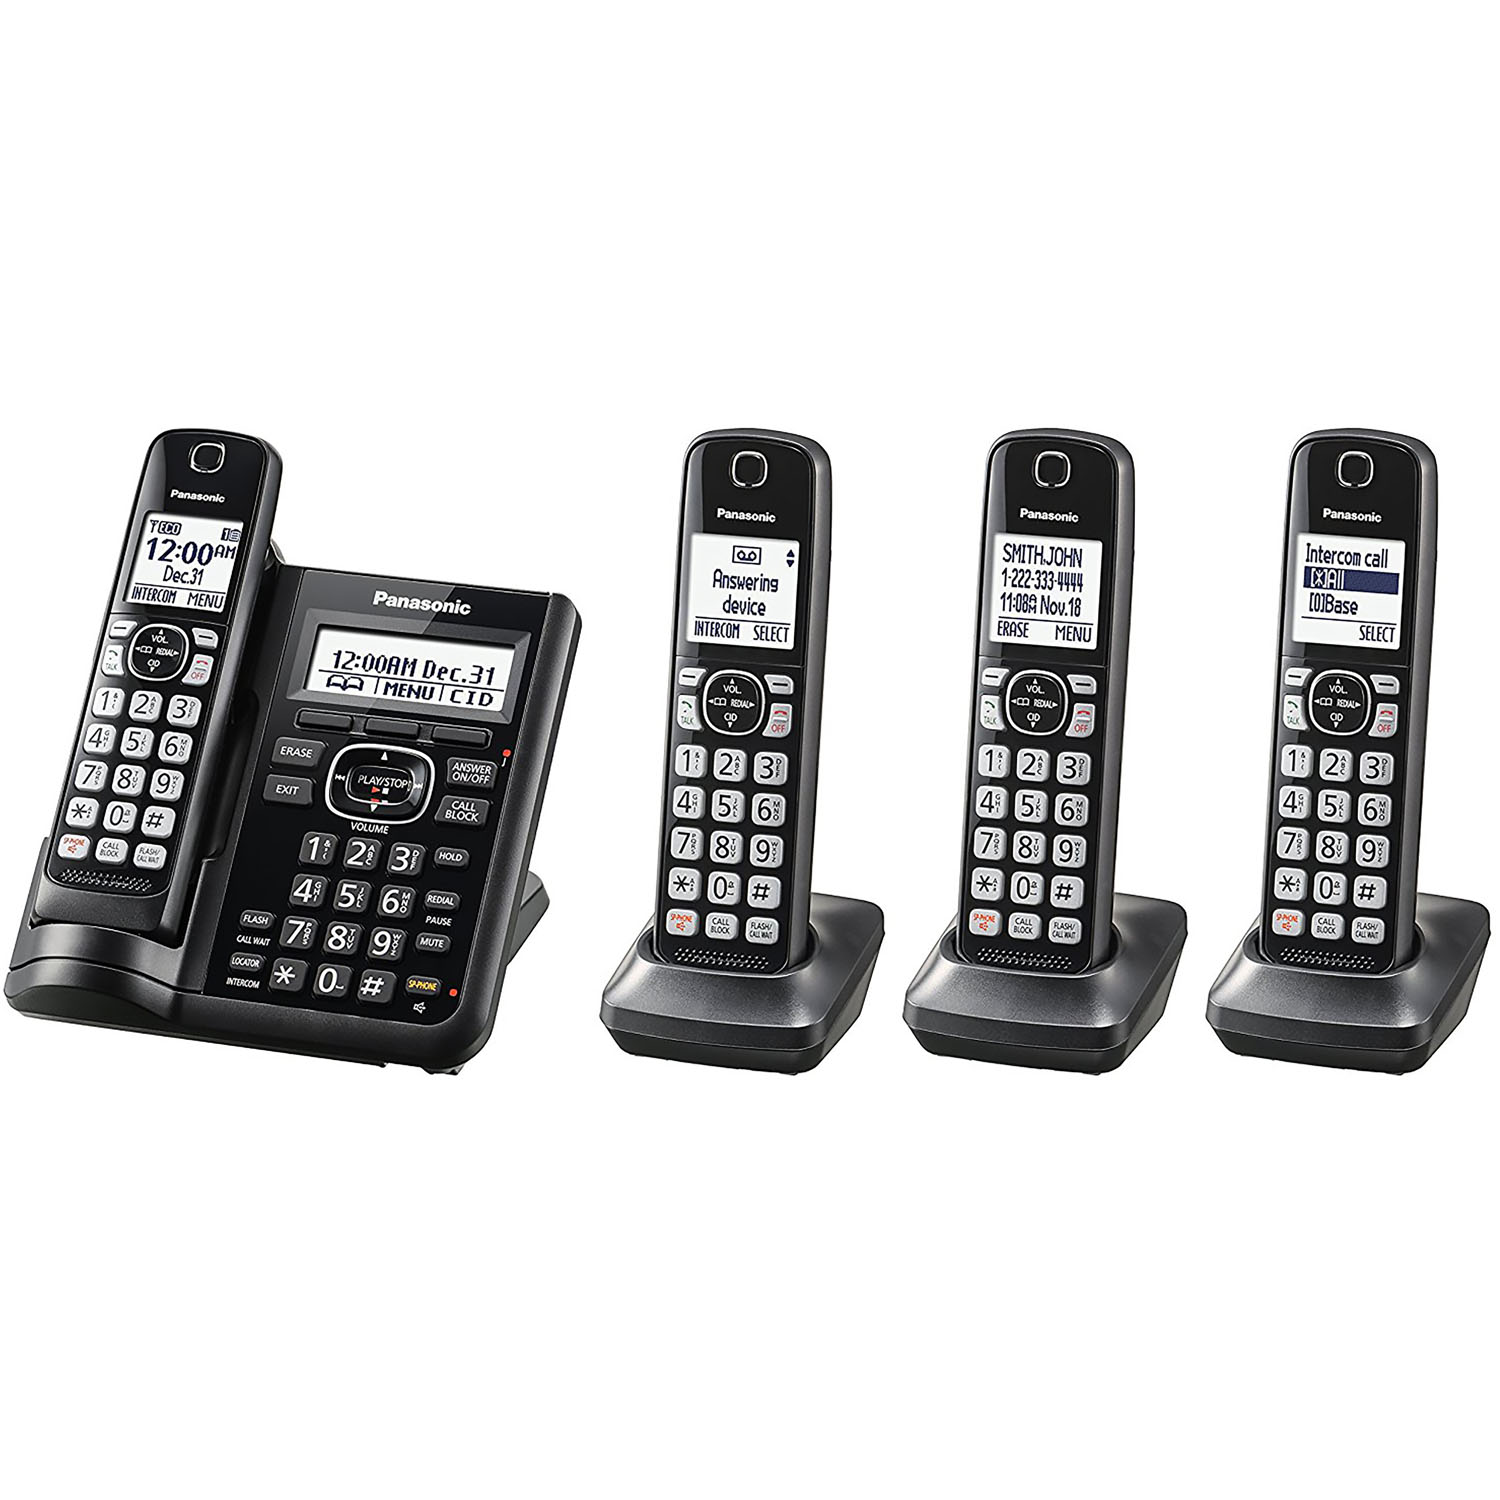 Panasonic Cordless Phones with Answering Machine - 4 Handsets - image 3 of 3